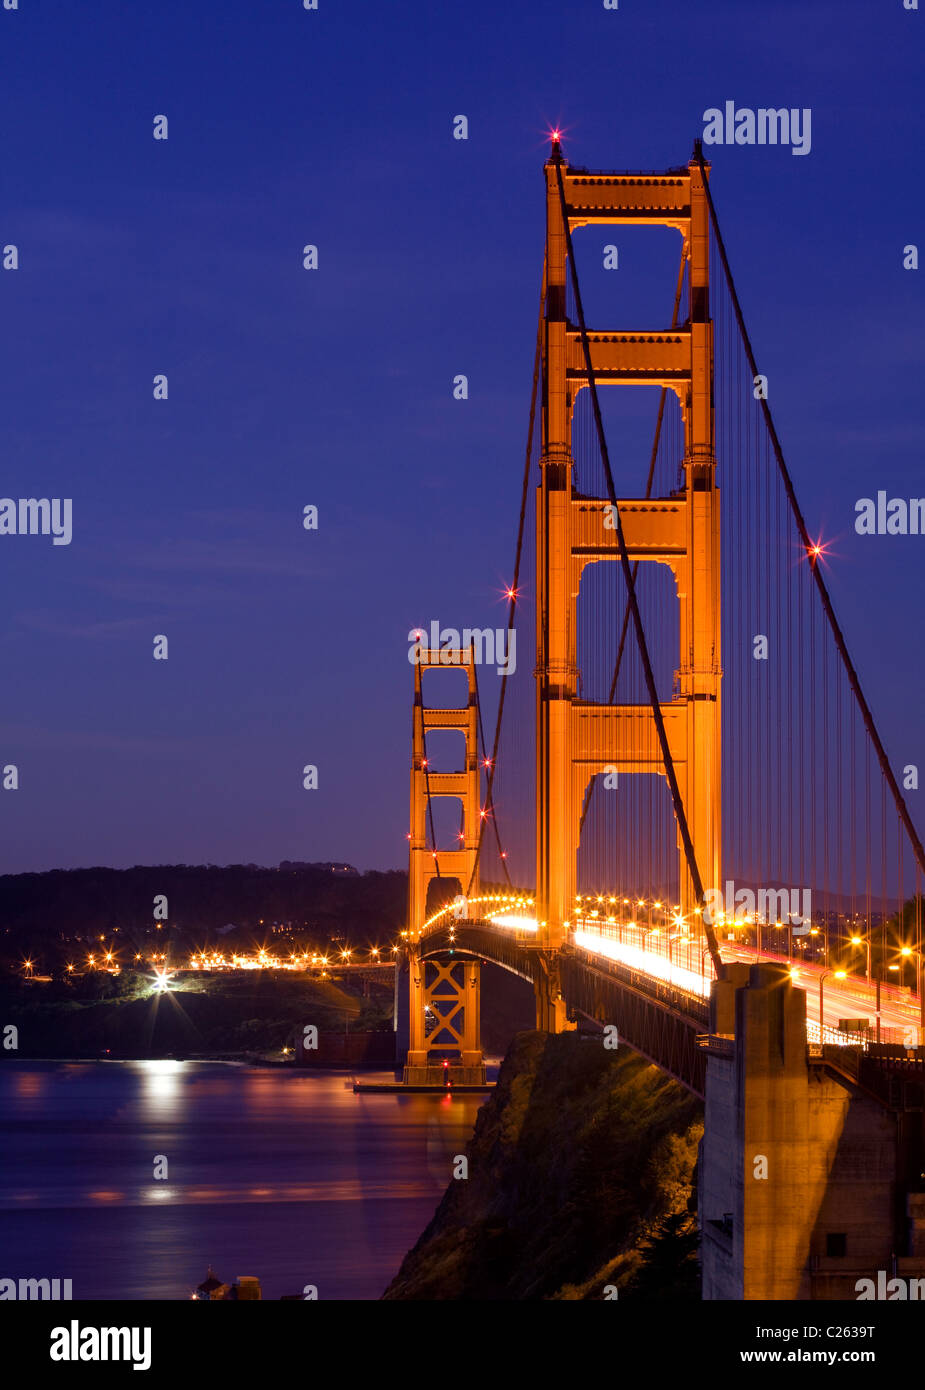 Le Golden Gate Bridge at night - San Francisco, California USA Banque D'Images